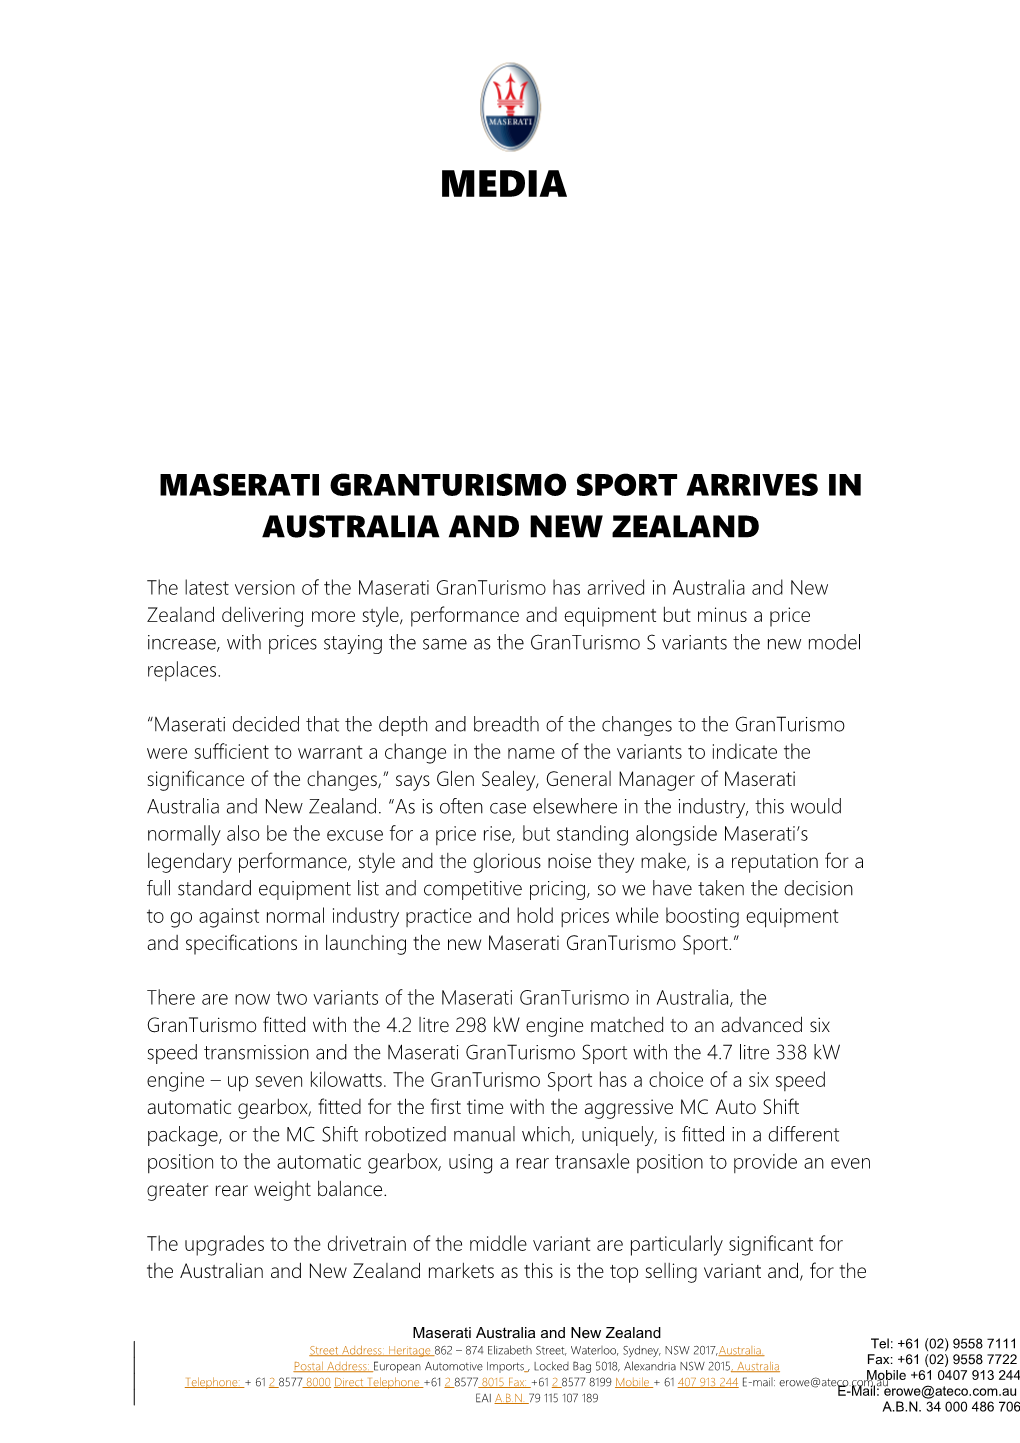 Maserati Granturismo Sport Arrives in Australia and New Zealand